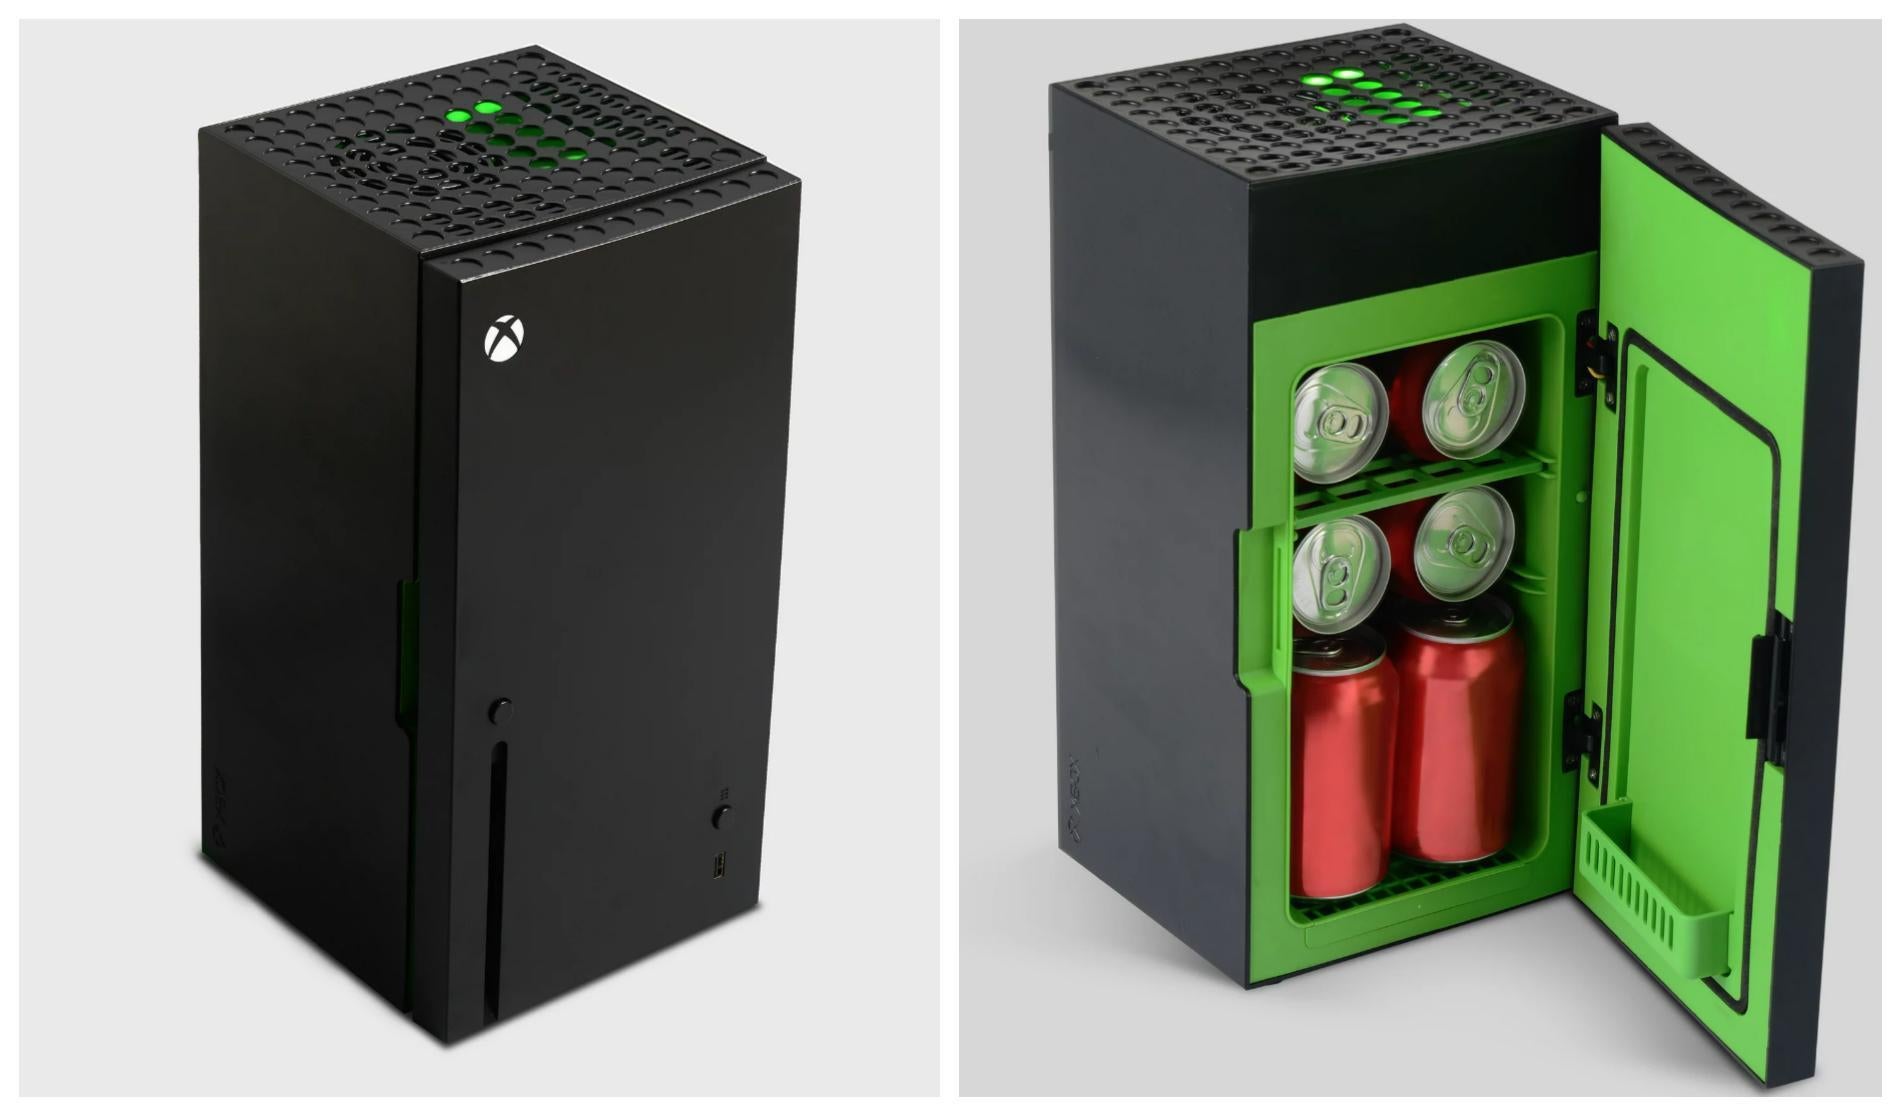 You can pre-order Microsoft's official Xbox Series X mini fridge